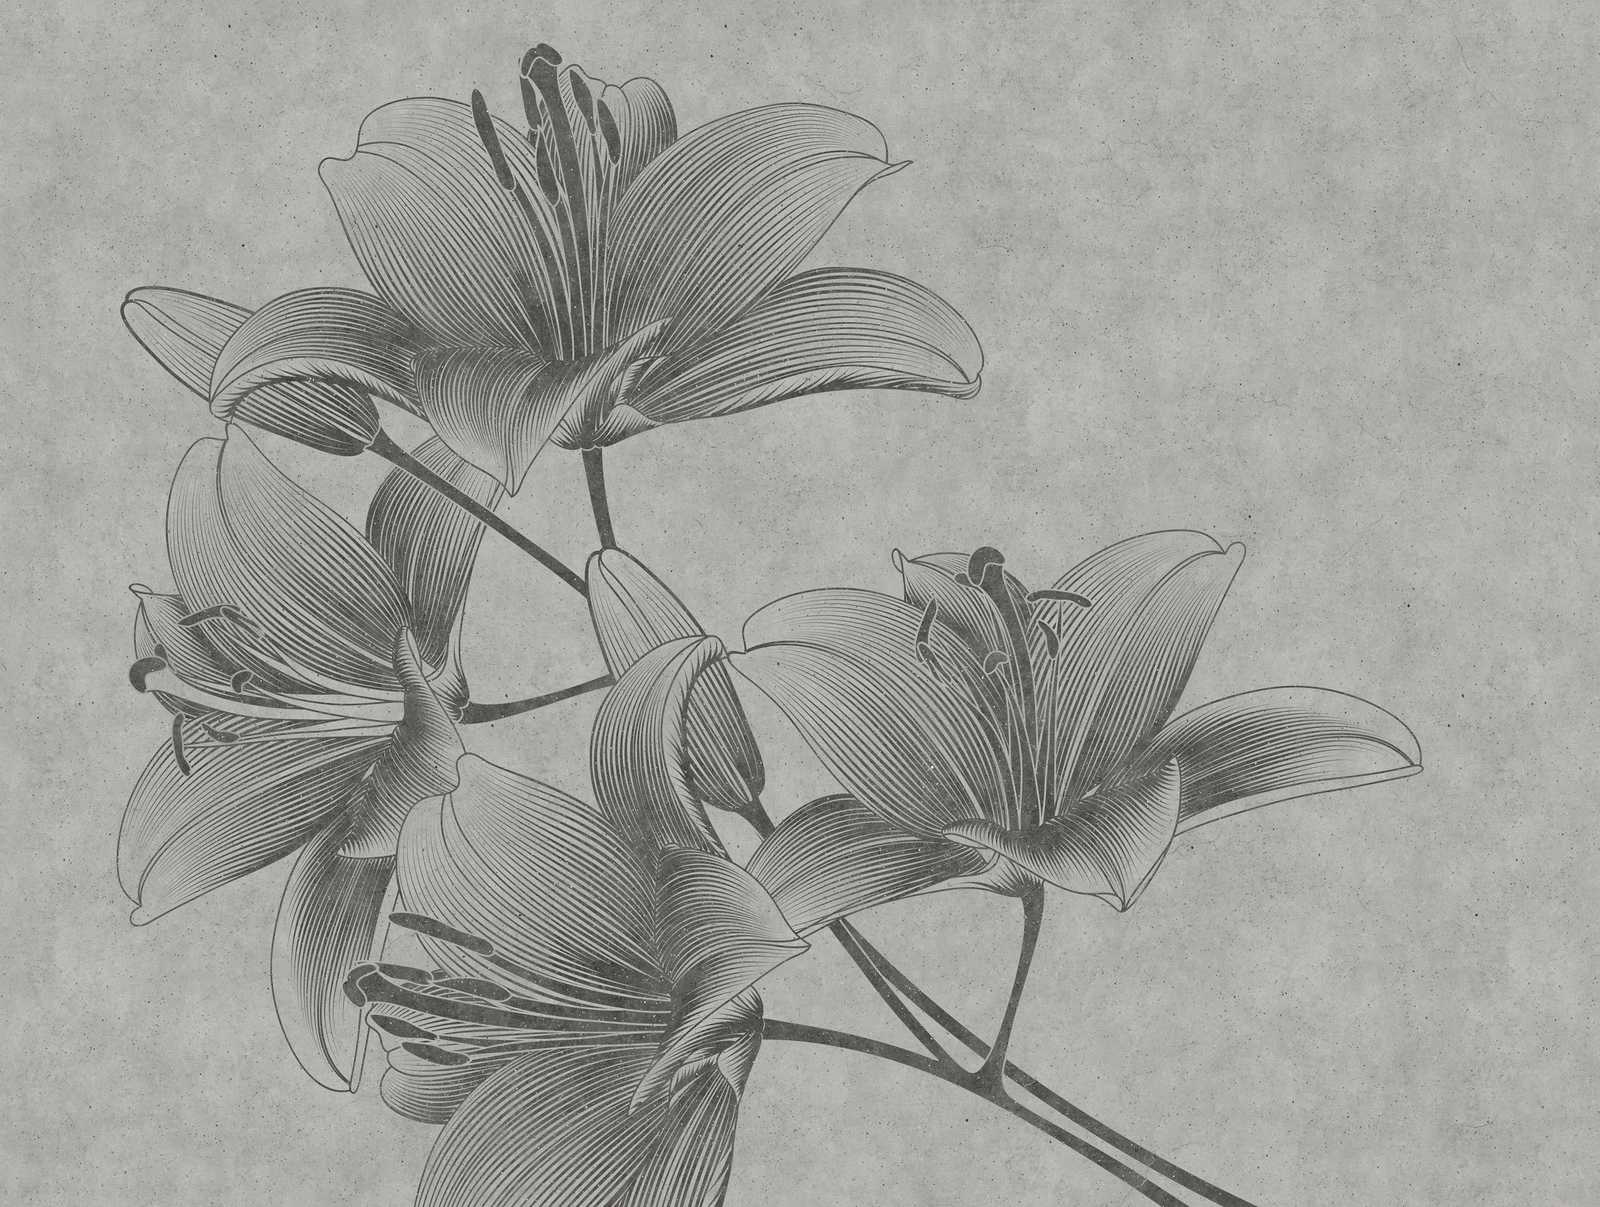             Tapeten-Neuheit | Graue Blumen-Tapete Lilien im Line Art Stil
        